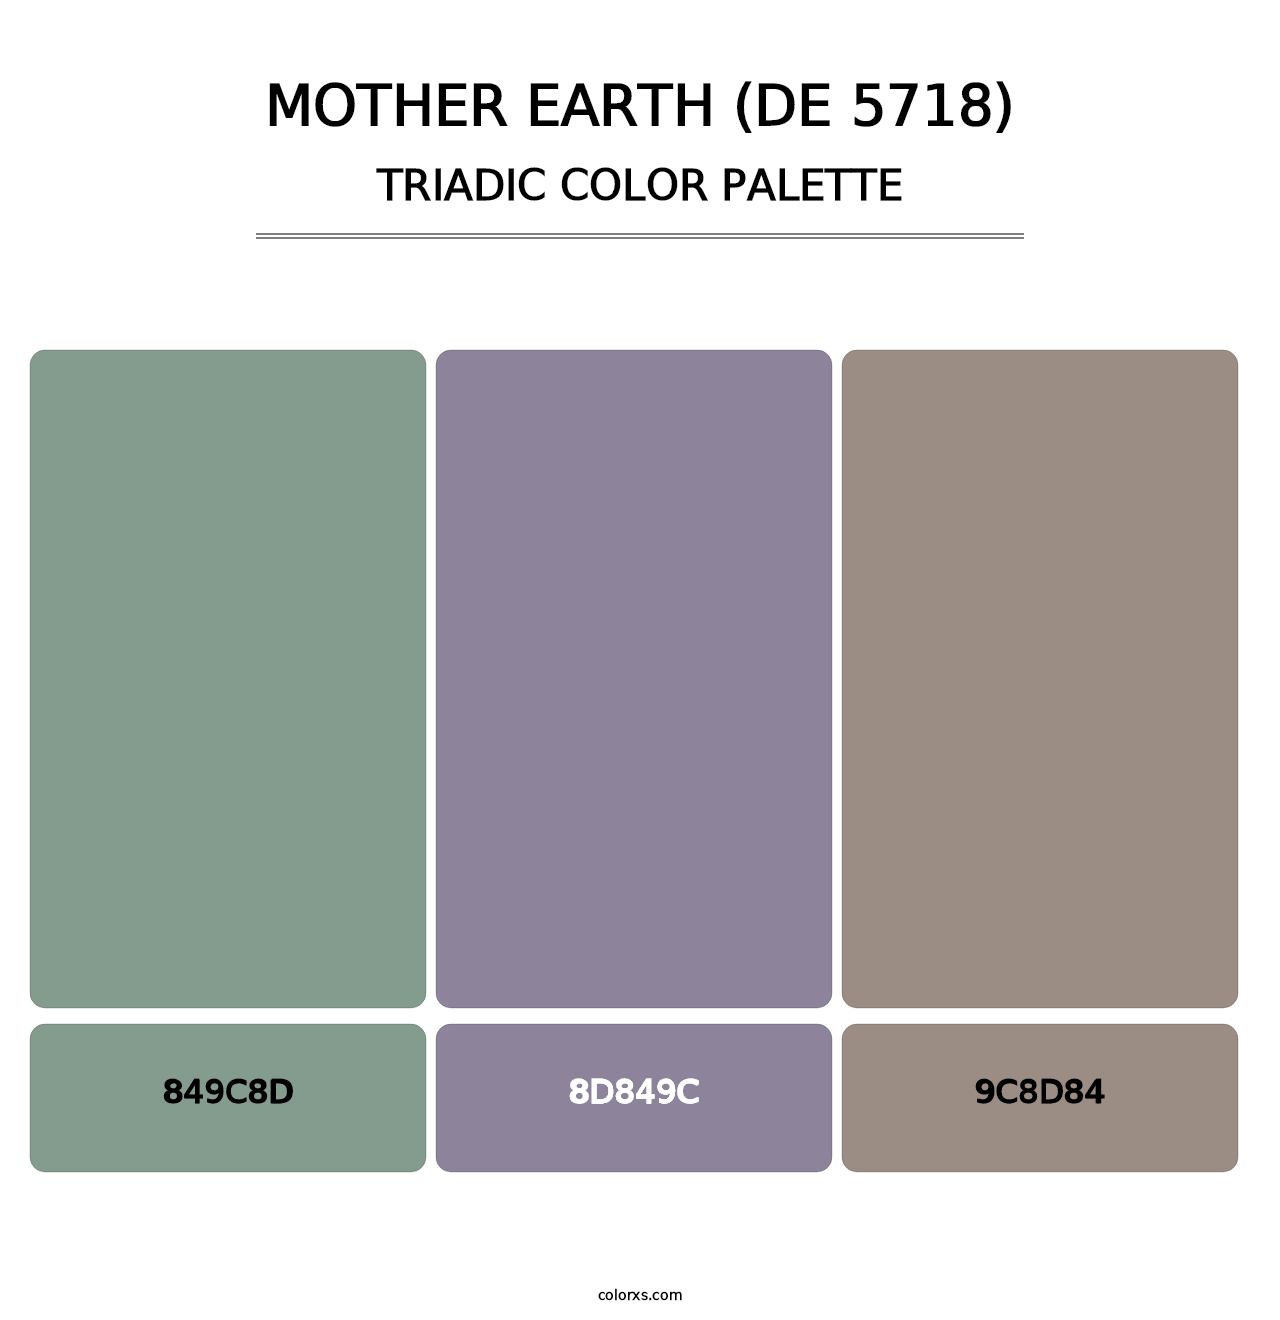 Mother Earth (DE 5718) - Triadic Color Palette